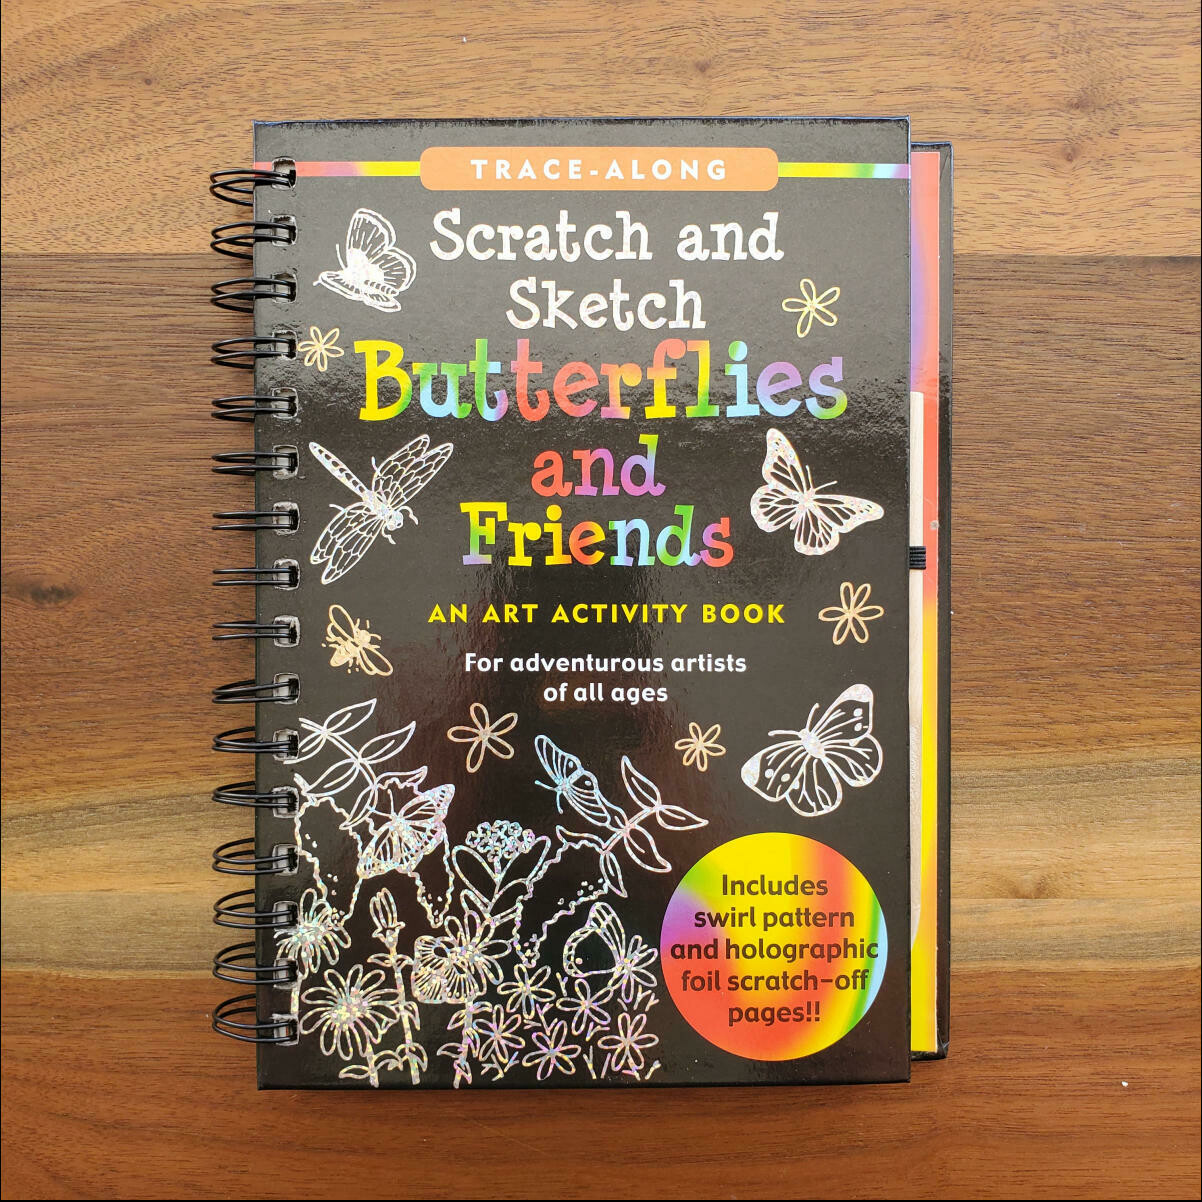 Peter Pauper Press Trace-Along Scratch and Sketch Butterflies and Friends